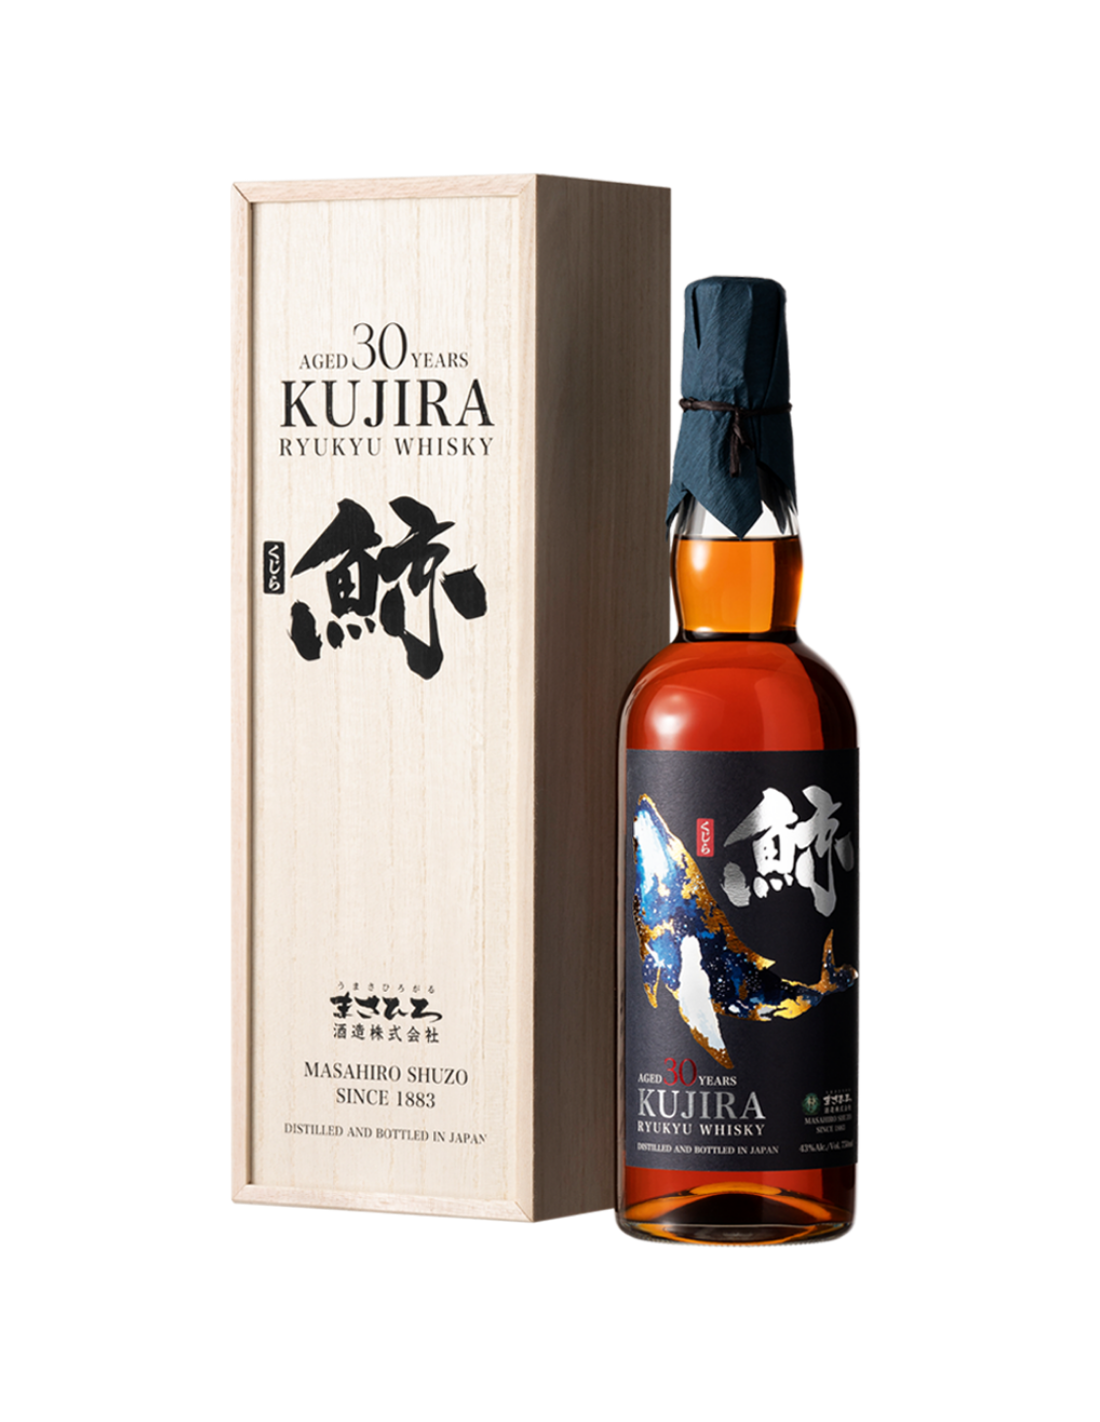 Whisky Kujira Ryukyu 30 Years, 0.7L, 43% alc., Japonia alcooldiscount.ro